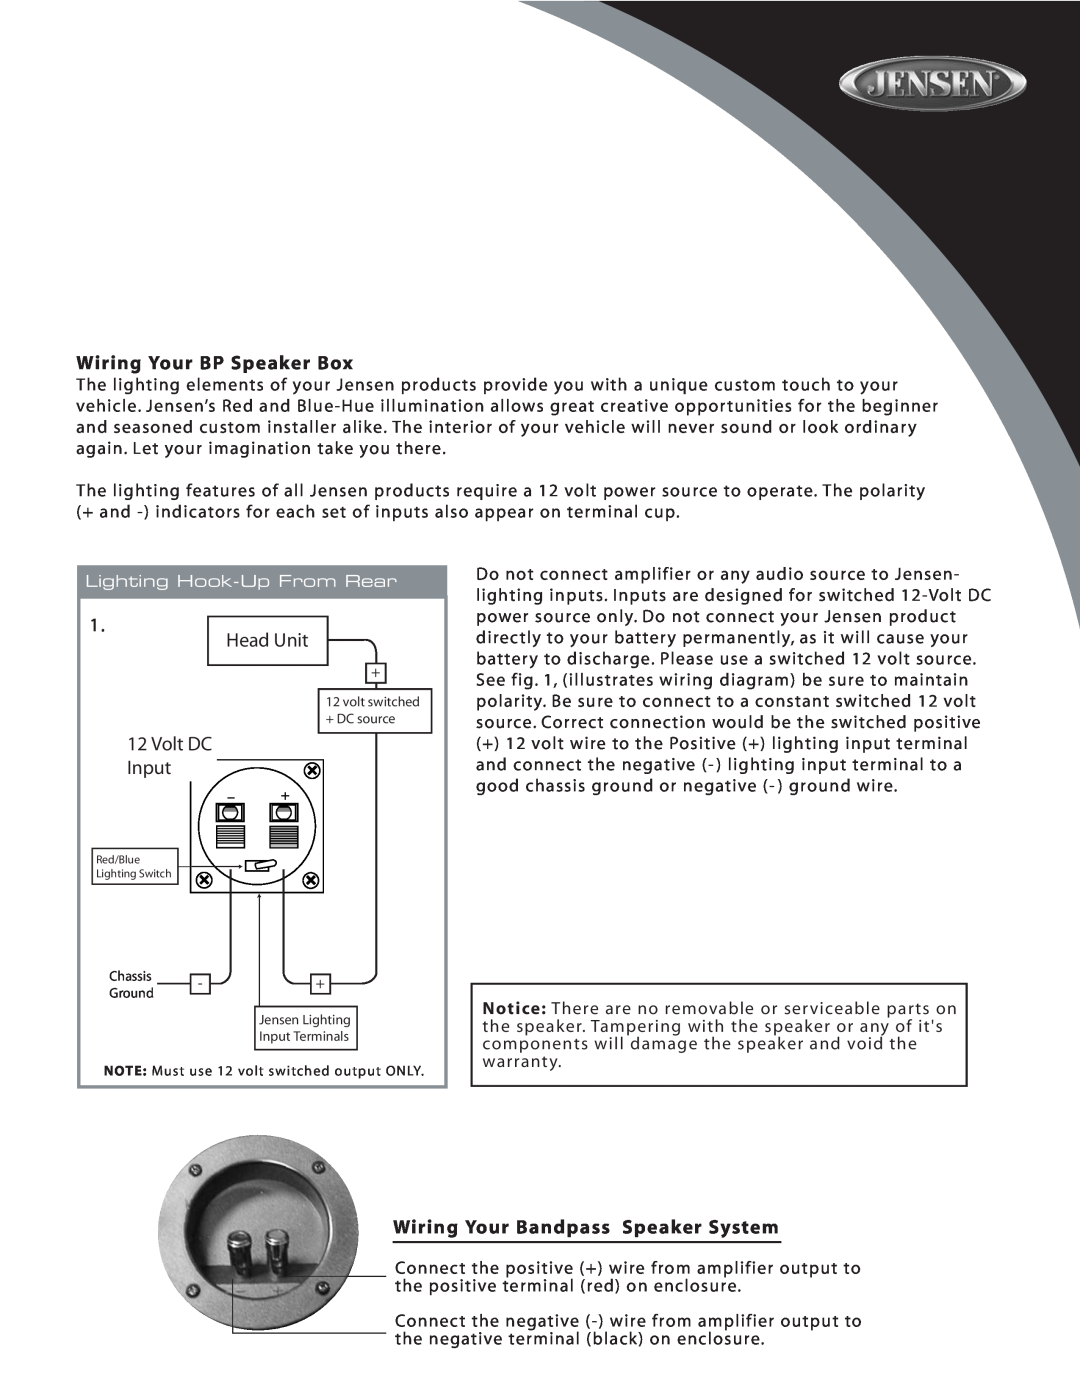 Audiovox BP210, BP212 owner manual Wiring Your BP Speaker Box, Head Unit, Volt DC Input, Wiring Your Bandpass Speaker System 